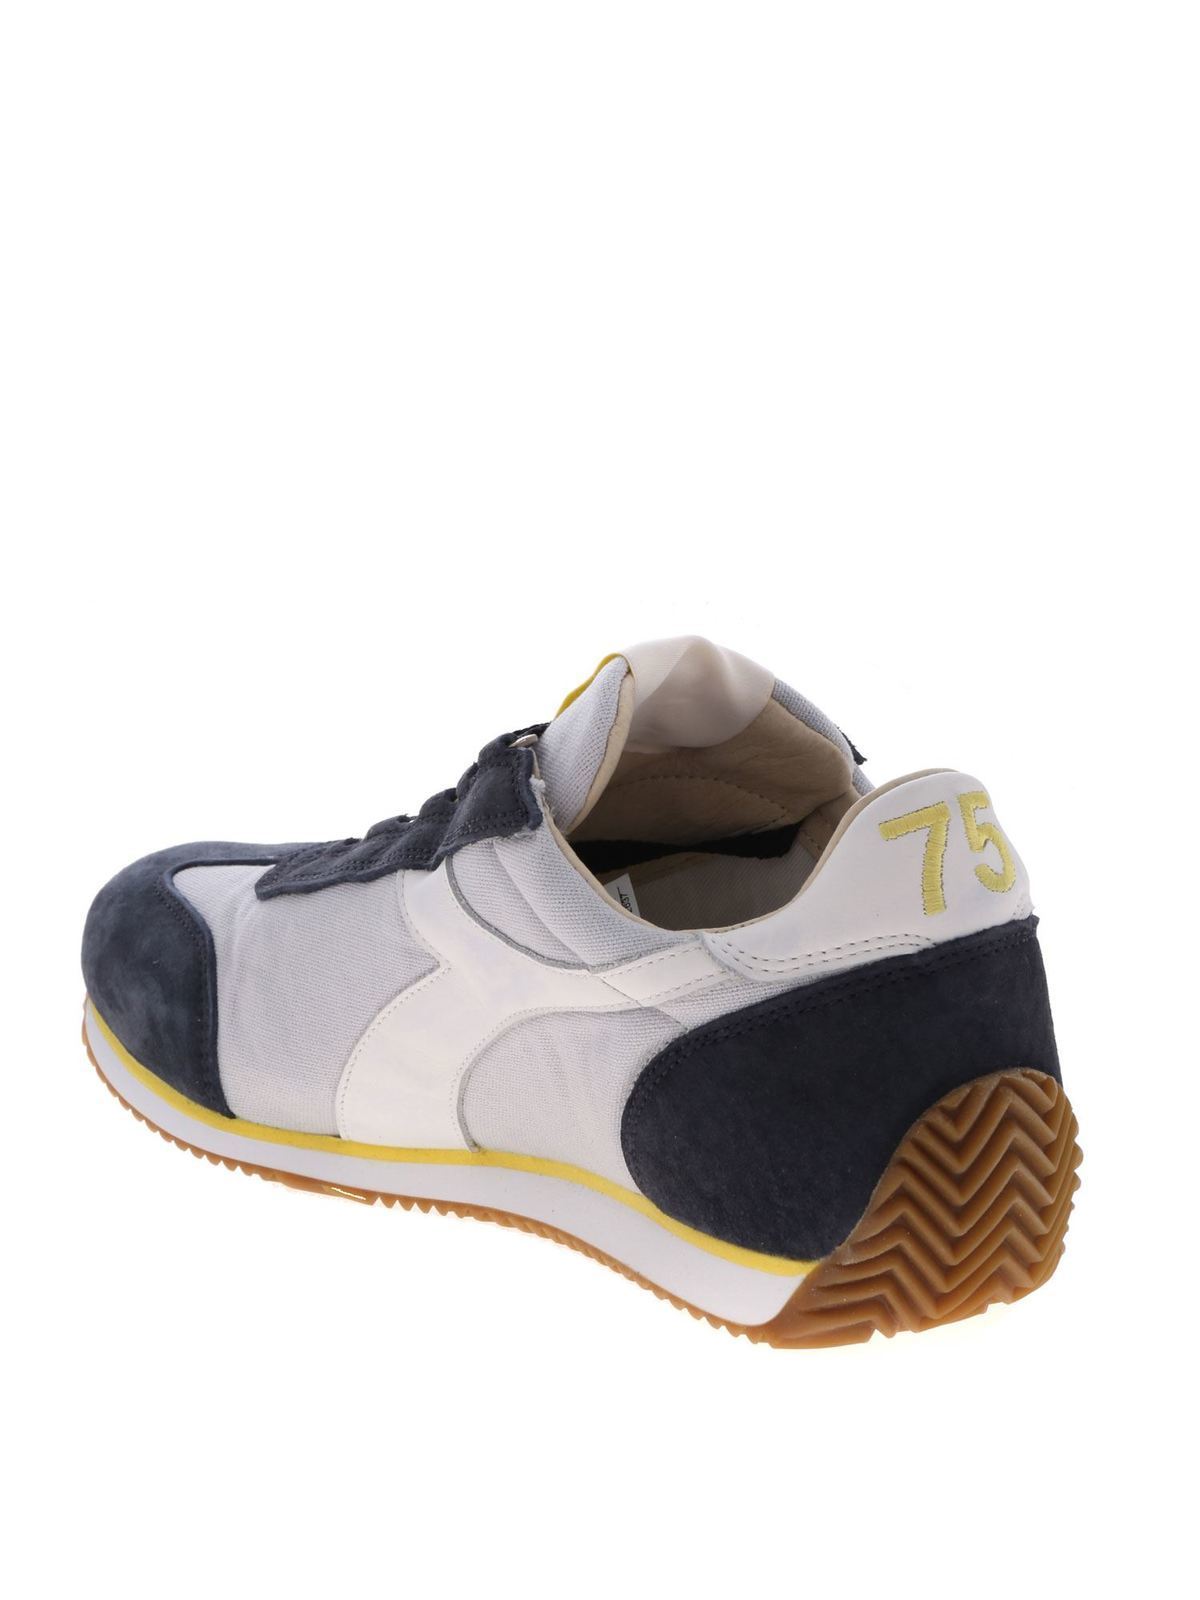 Overtekenen Achterhouden Anesthesie Trainers Diadora Heritage - Equipe H Canvas Stone Wash sneakers -  20117473501C0538